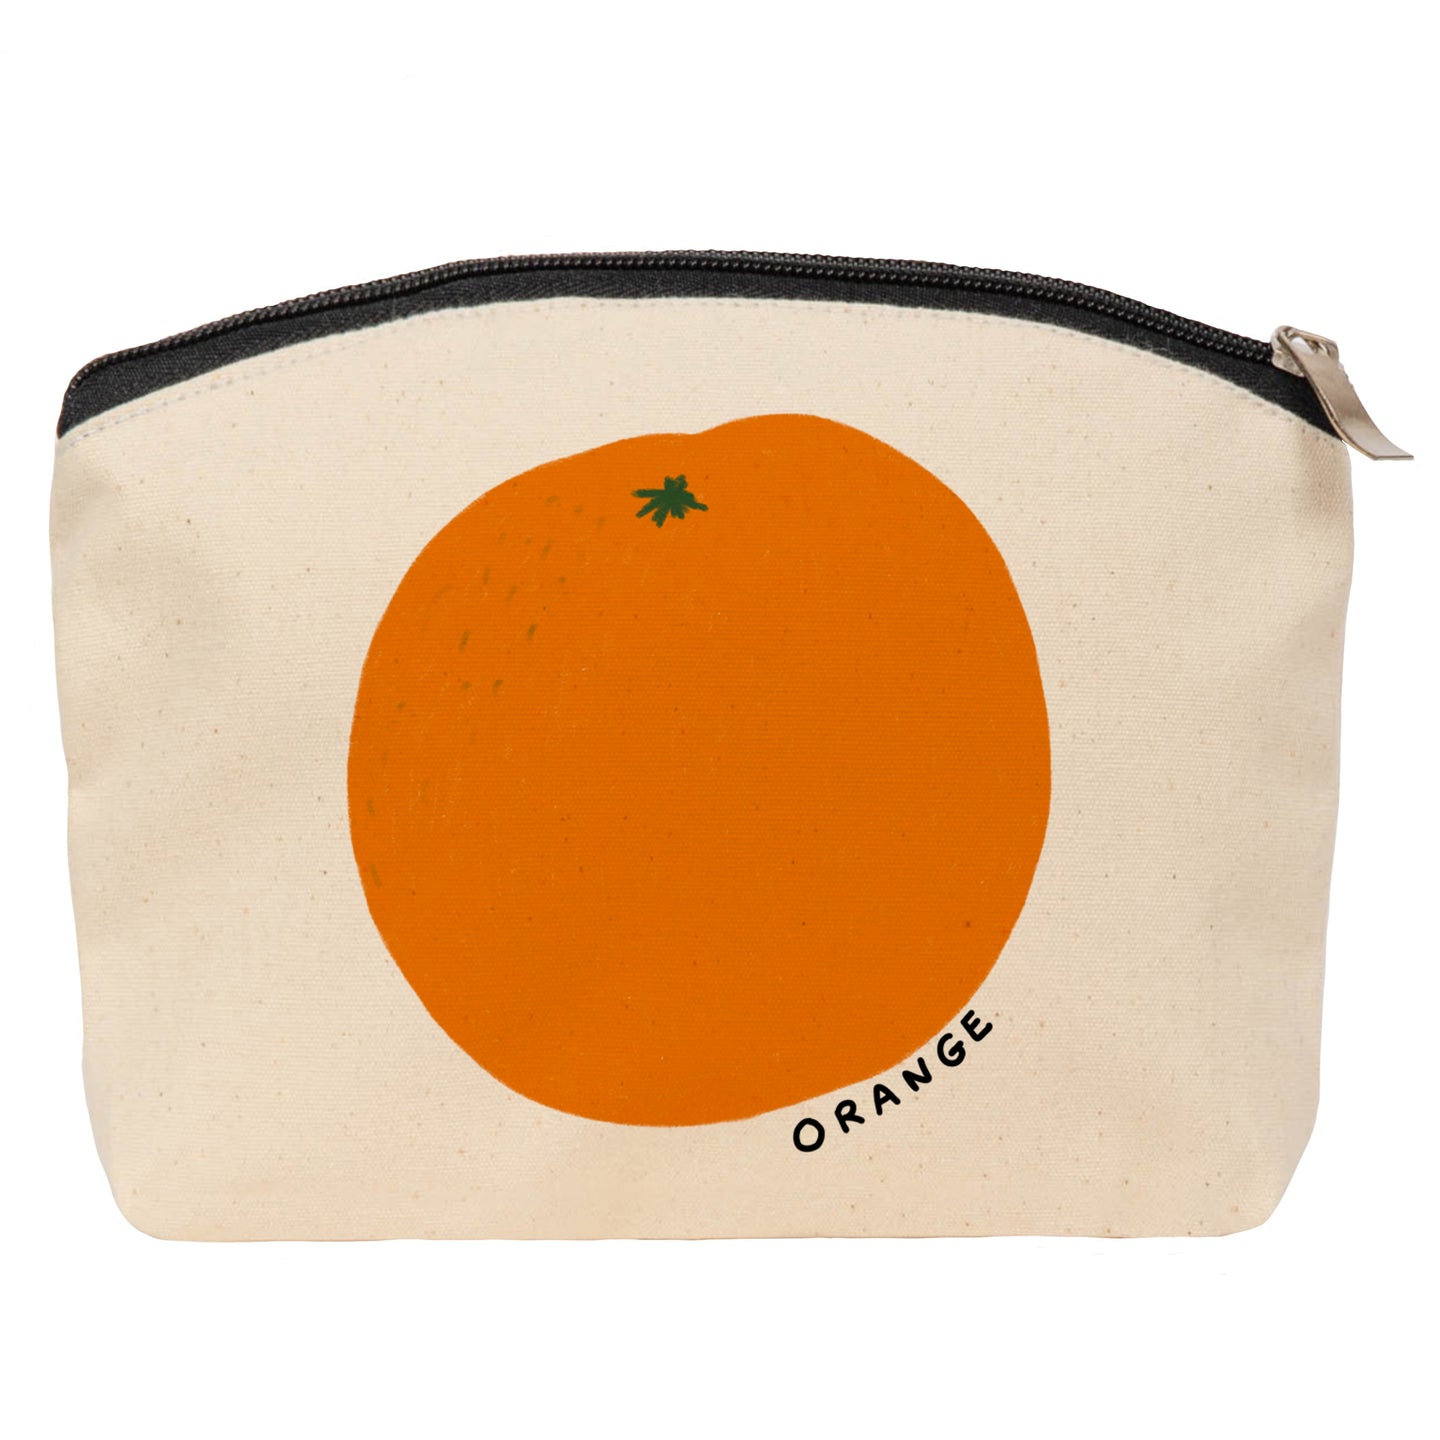 Orange cosmetic bag